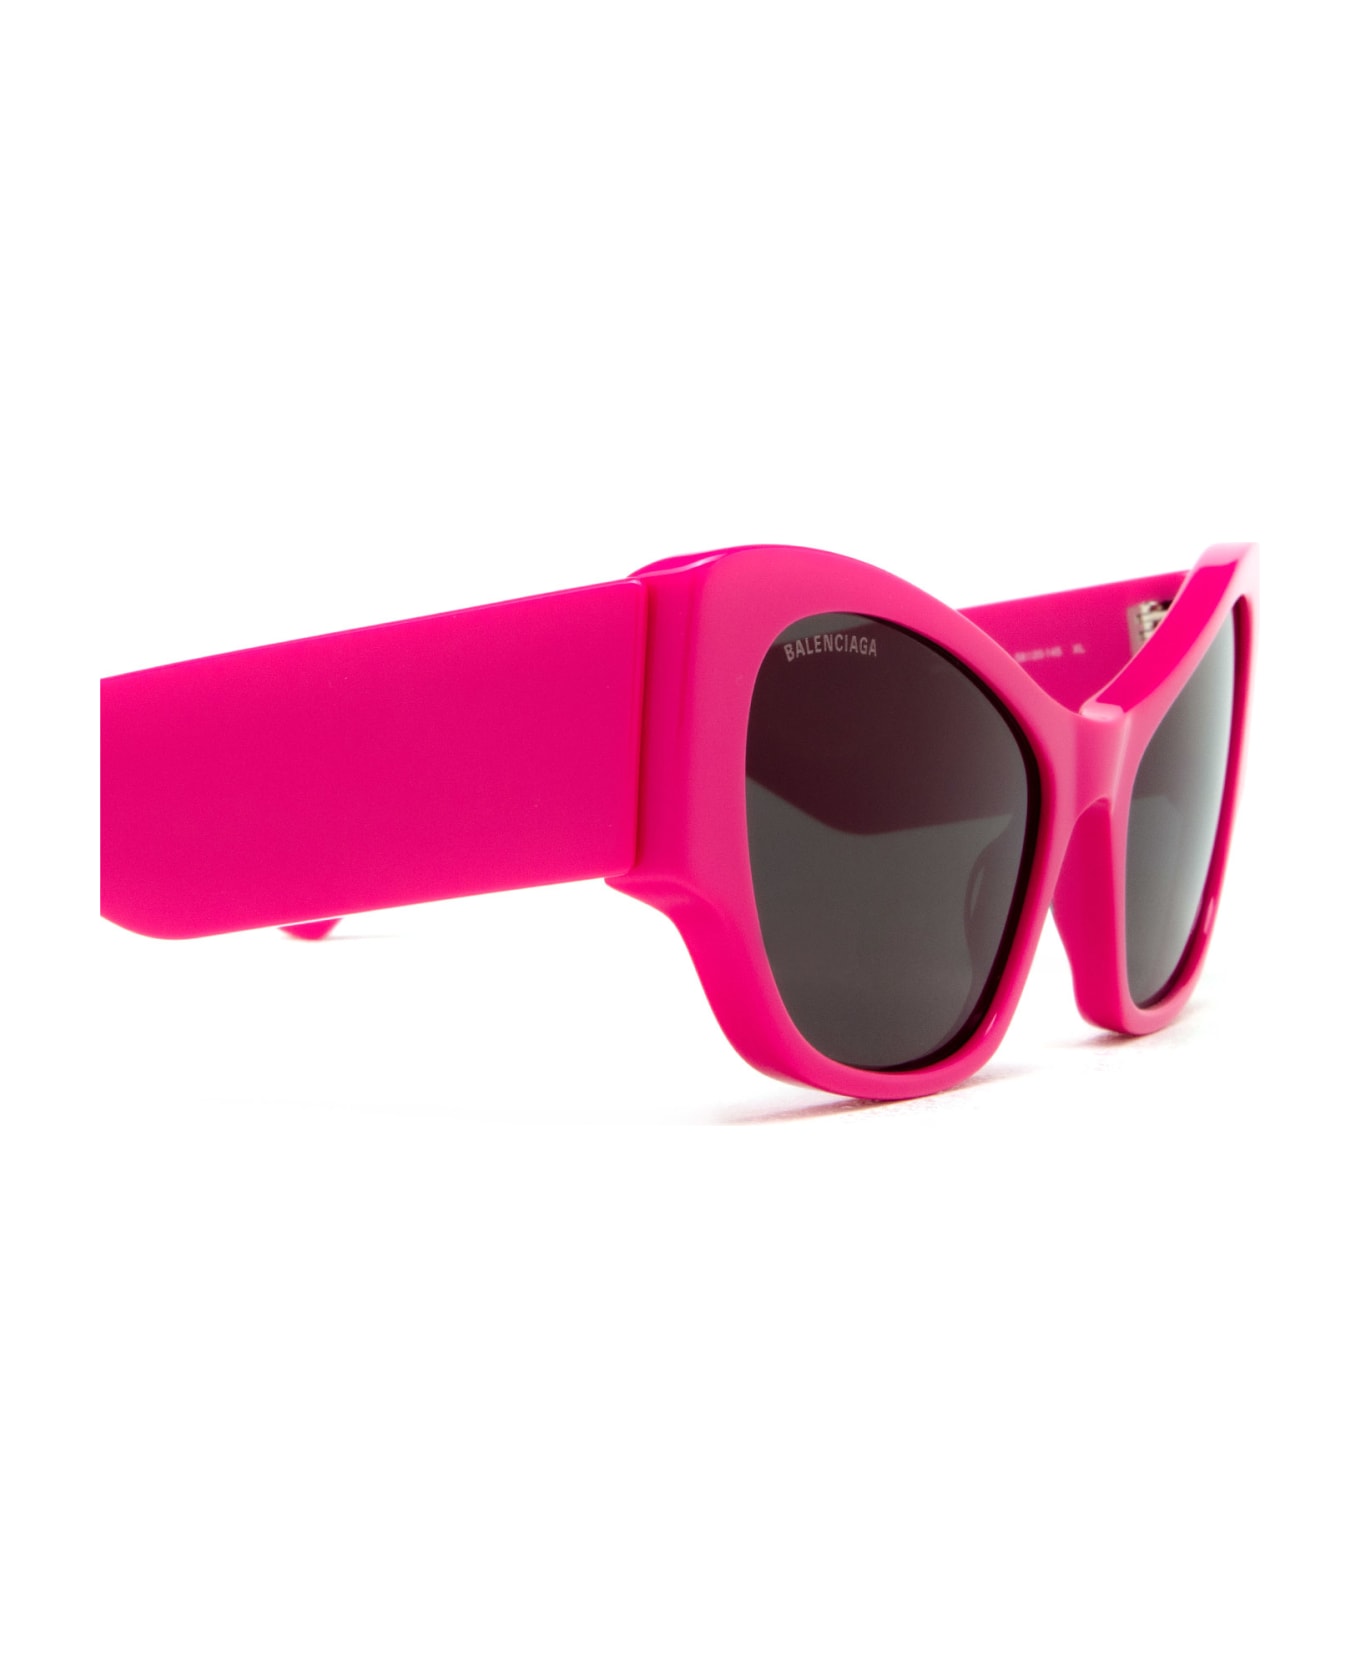 Balenciaga Eyewear Logo Sided Sunglasses - Fuchsia